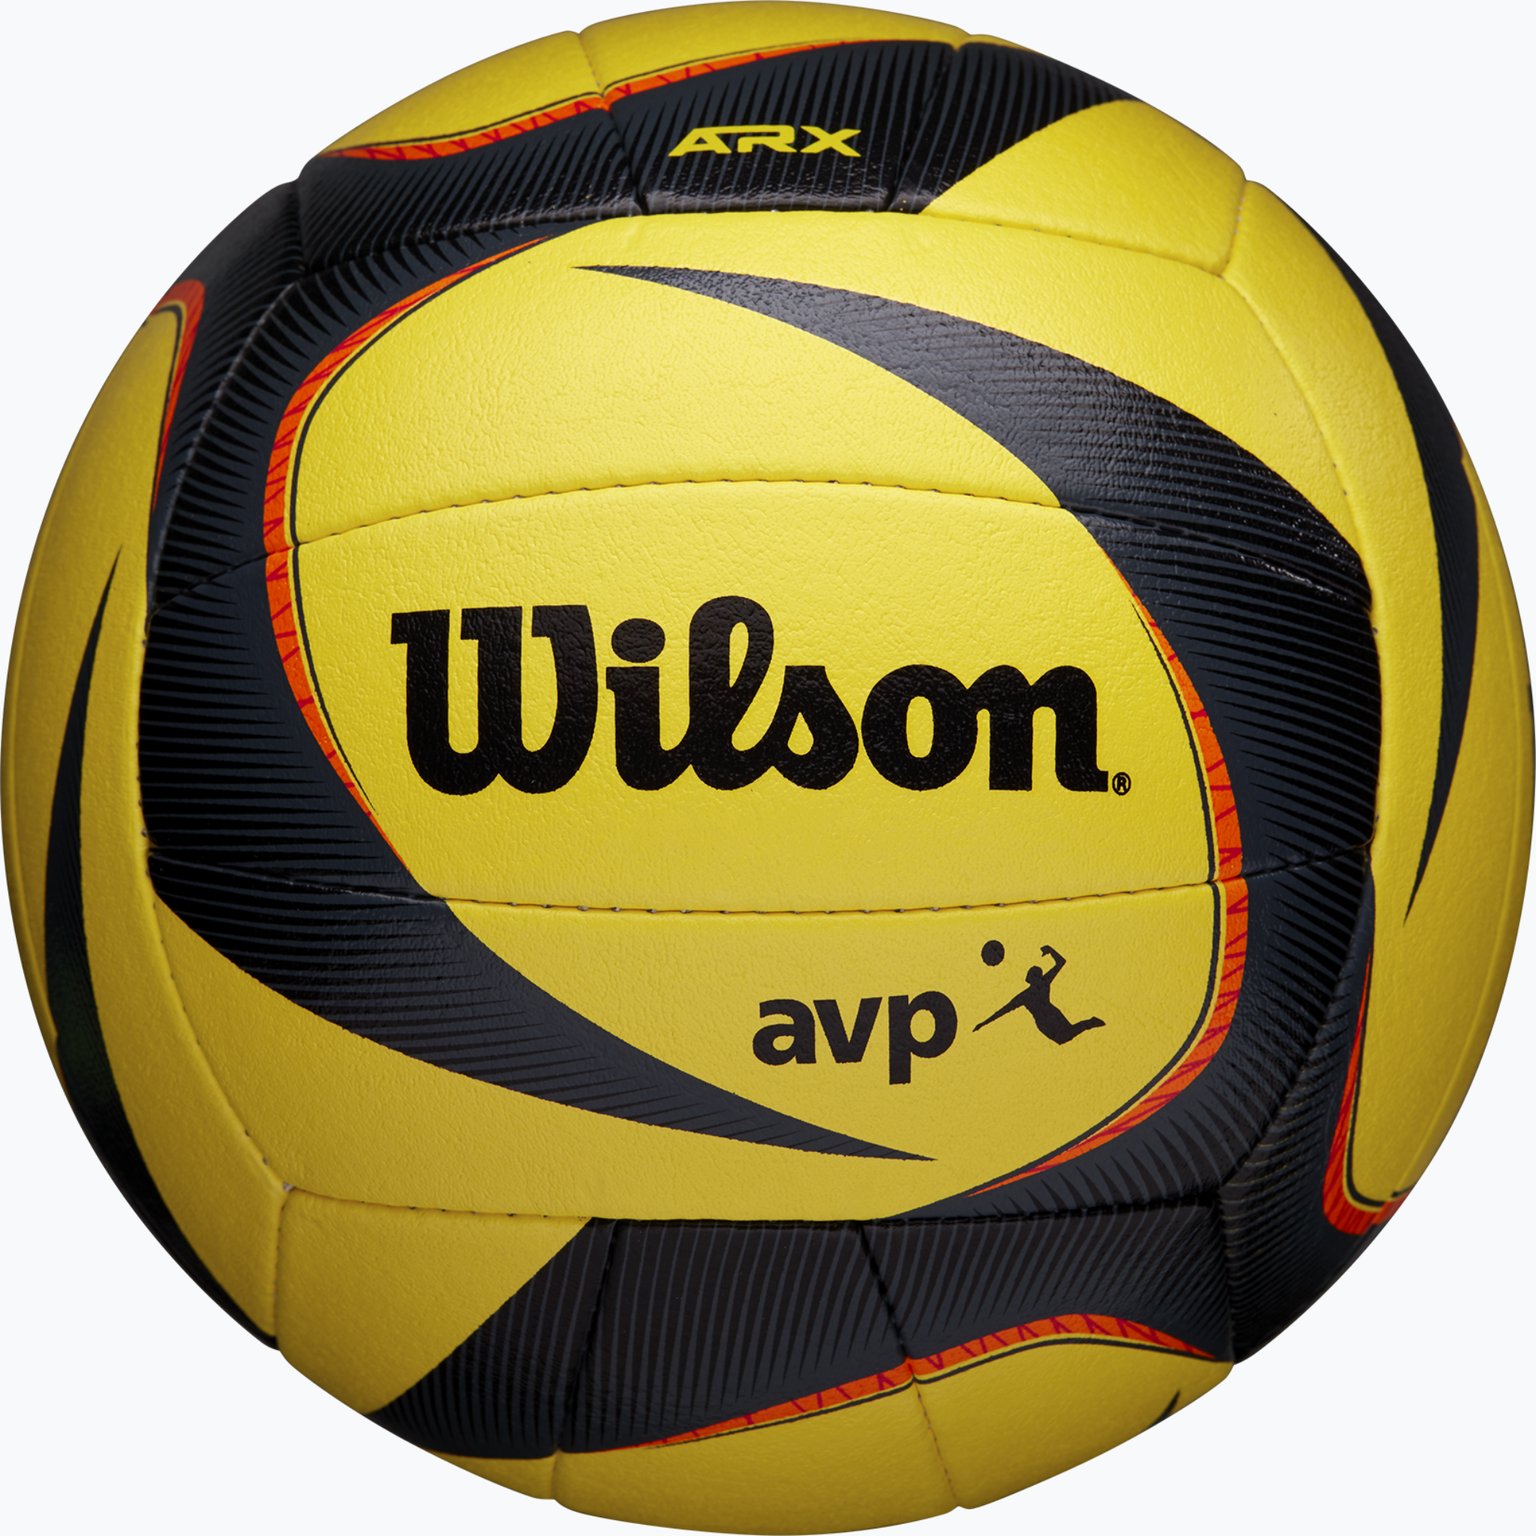 AVP ARX volleyboll 